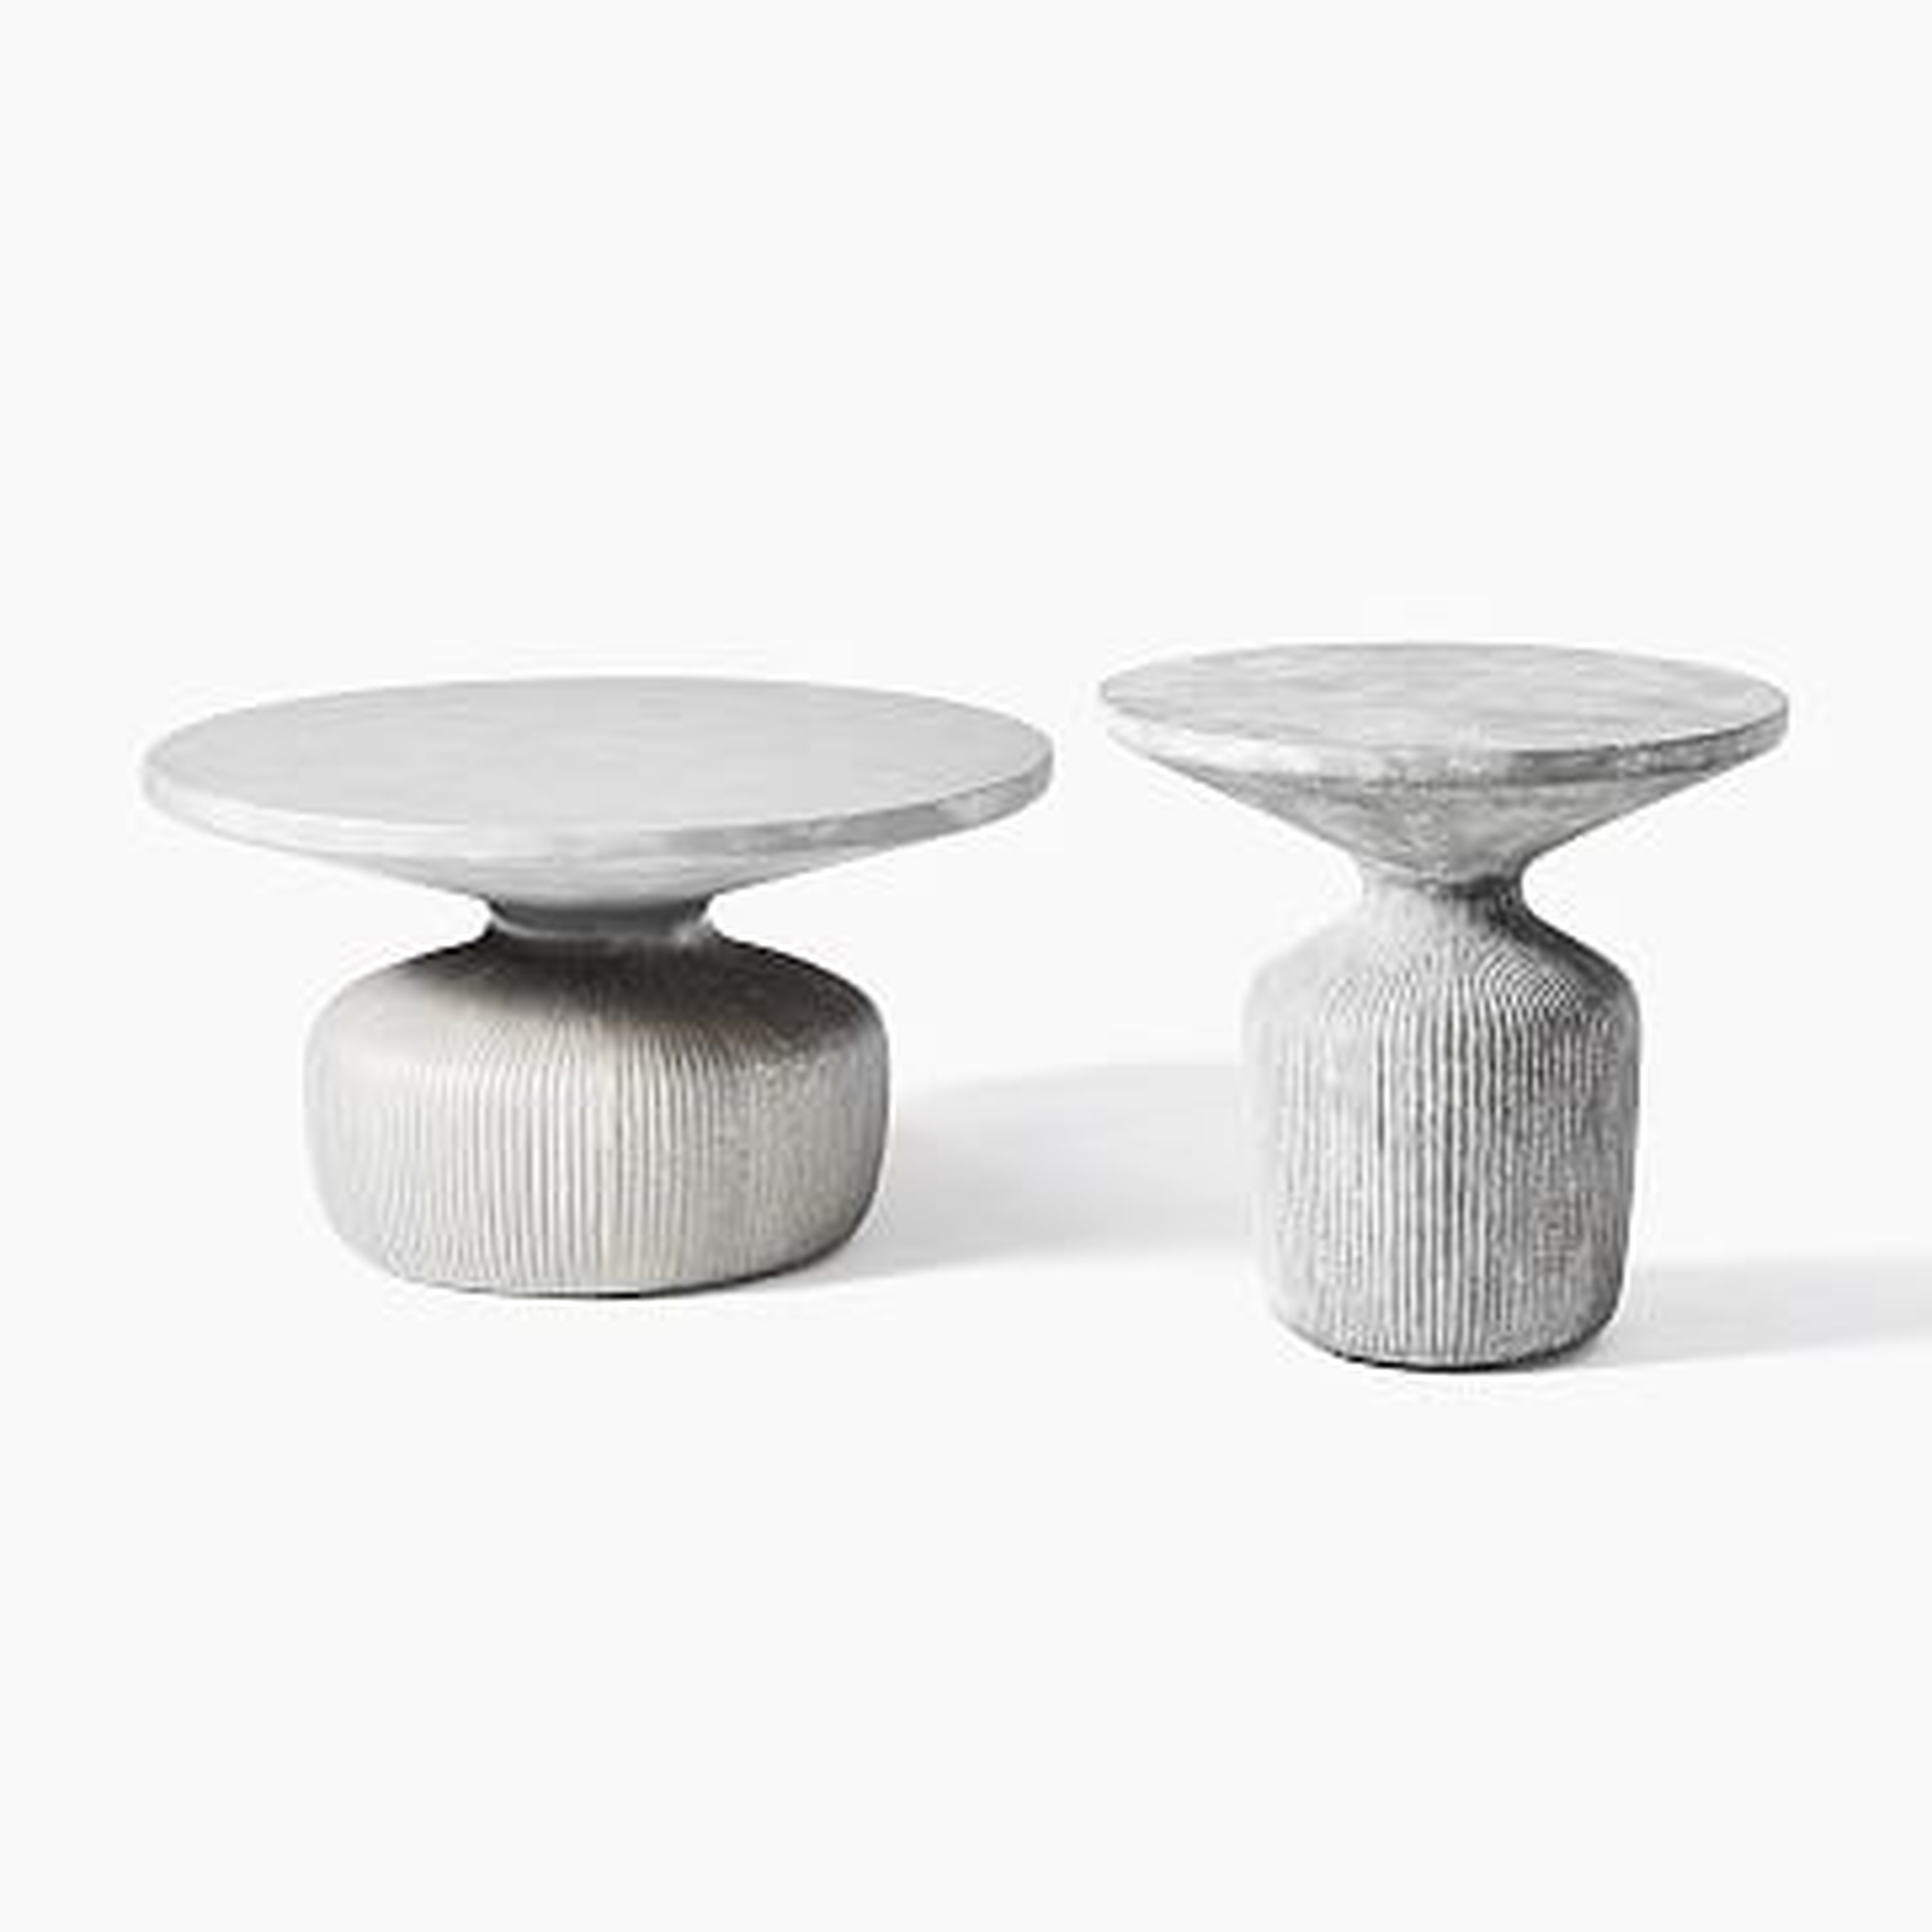 Tambor Concrete Outdoor Drum Coffee Table + Side Table Set - West Elm